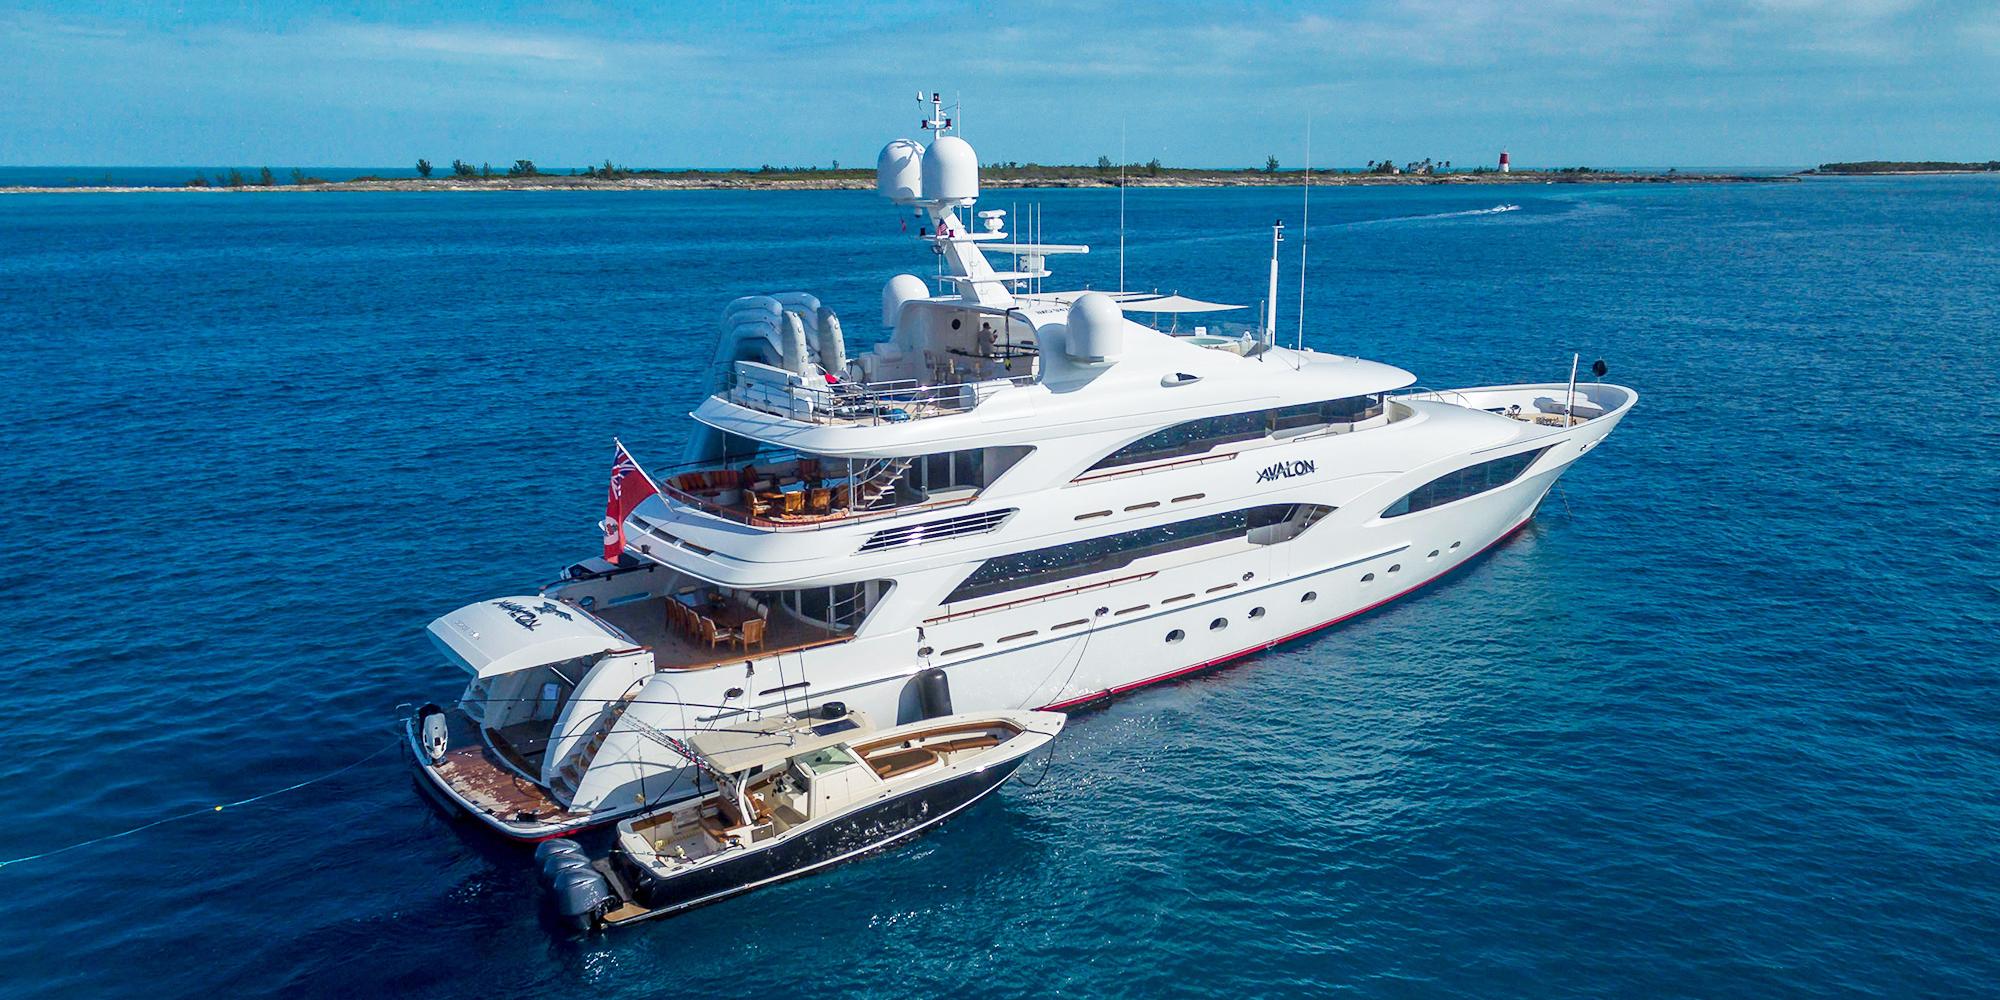 Luxury motor yacht AVALON — Yacht Charter & Superyacht News